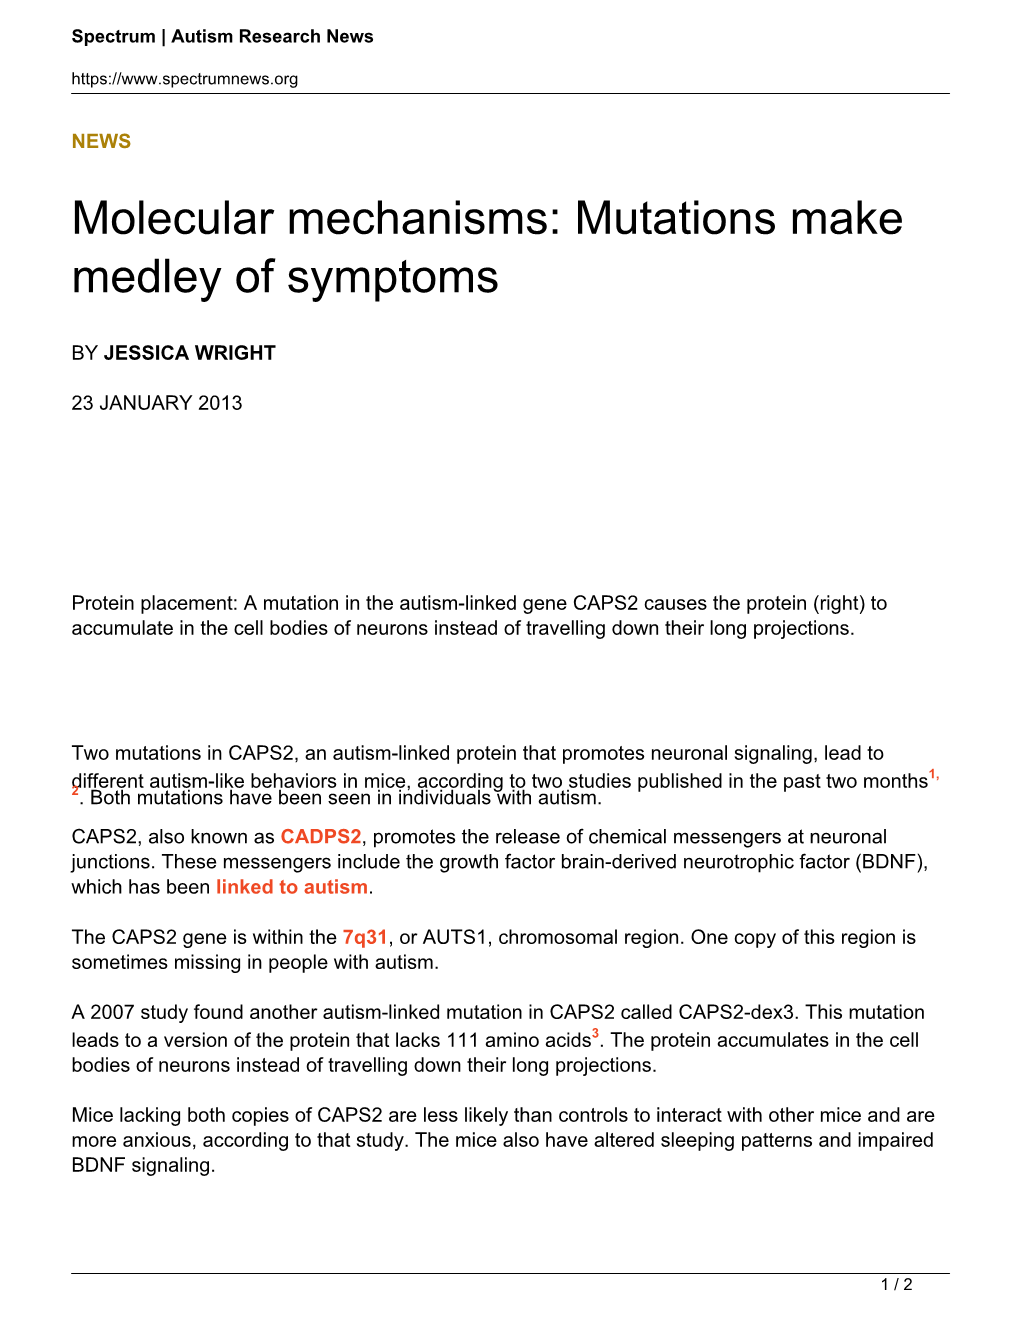 Molecular Mechanisms: Mutations Make Medley of Symptoms